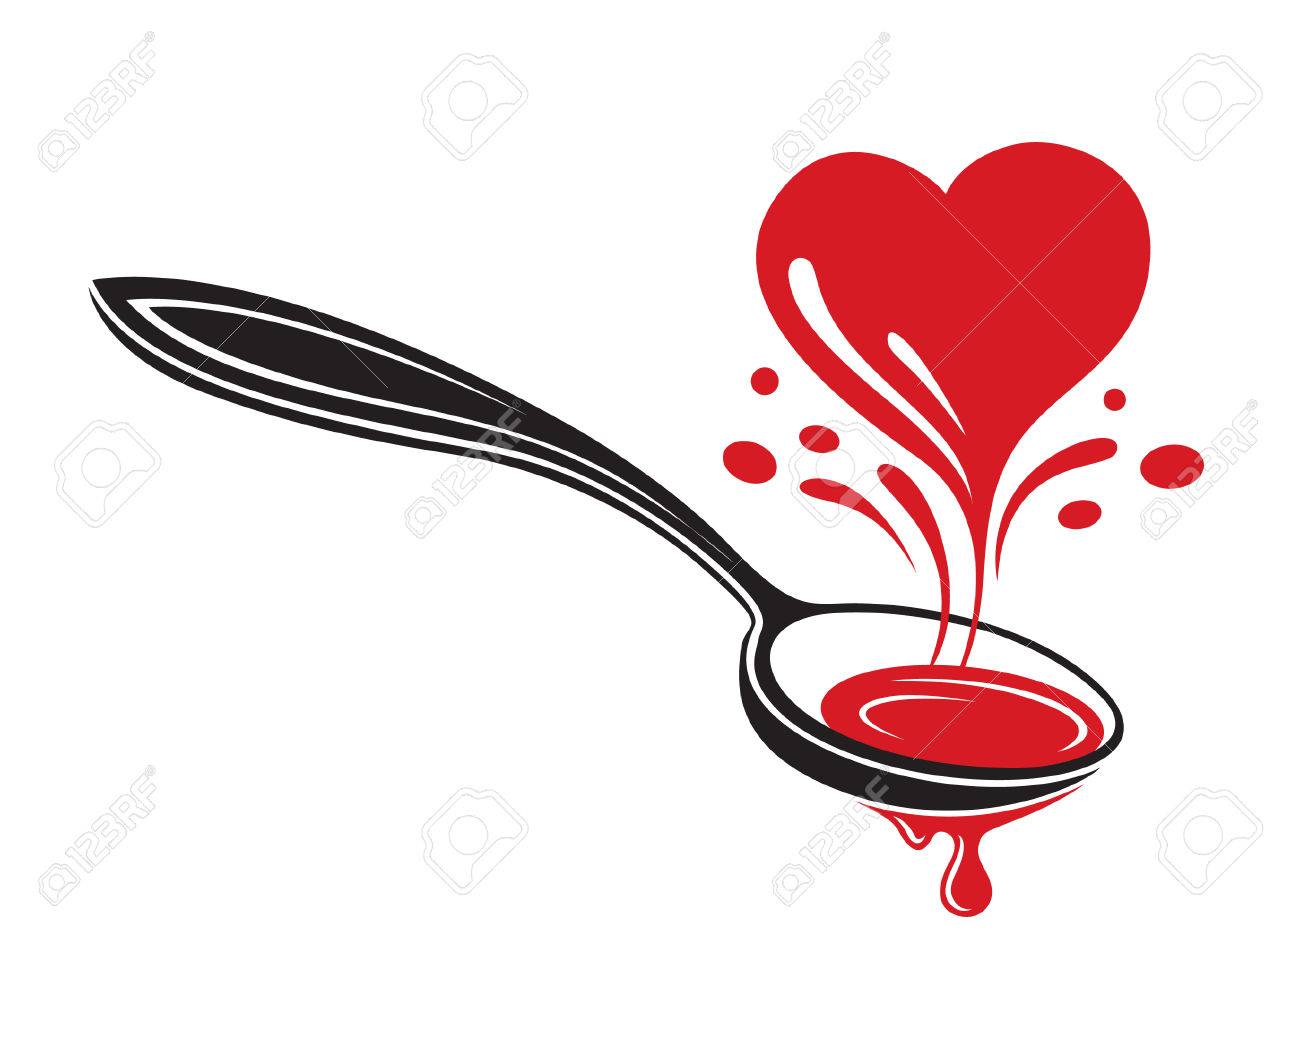 Spoon clipart heart.